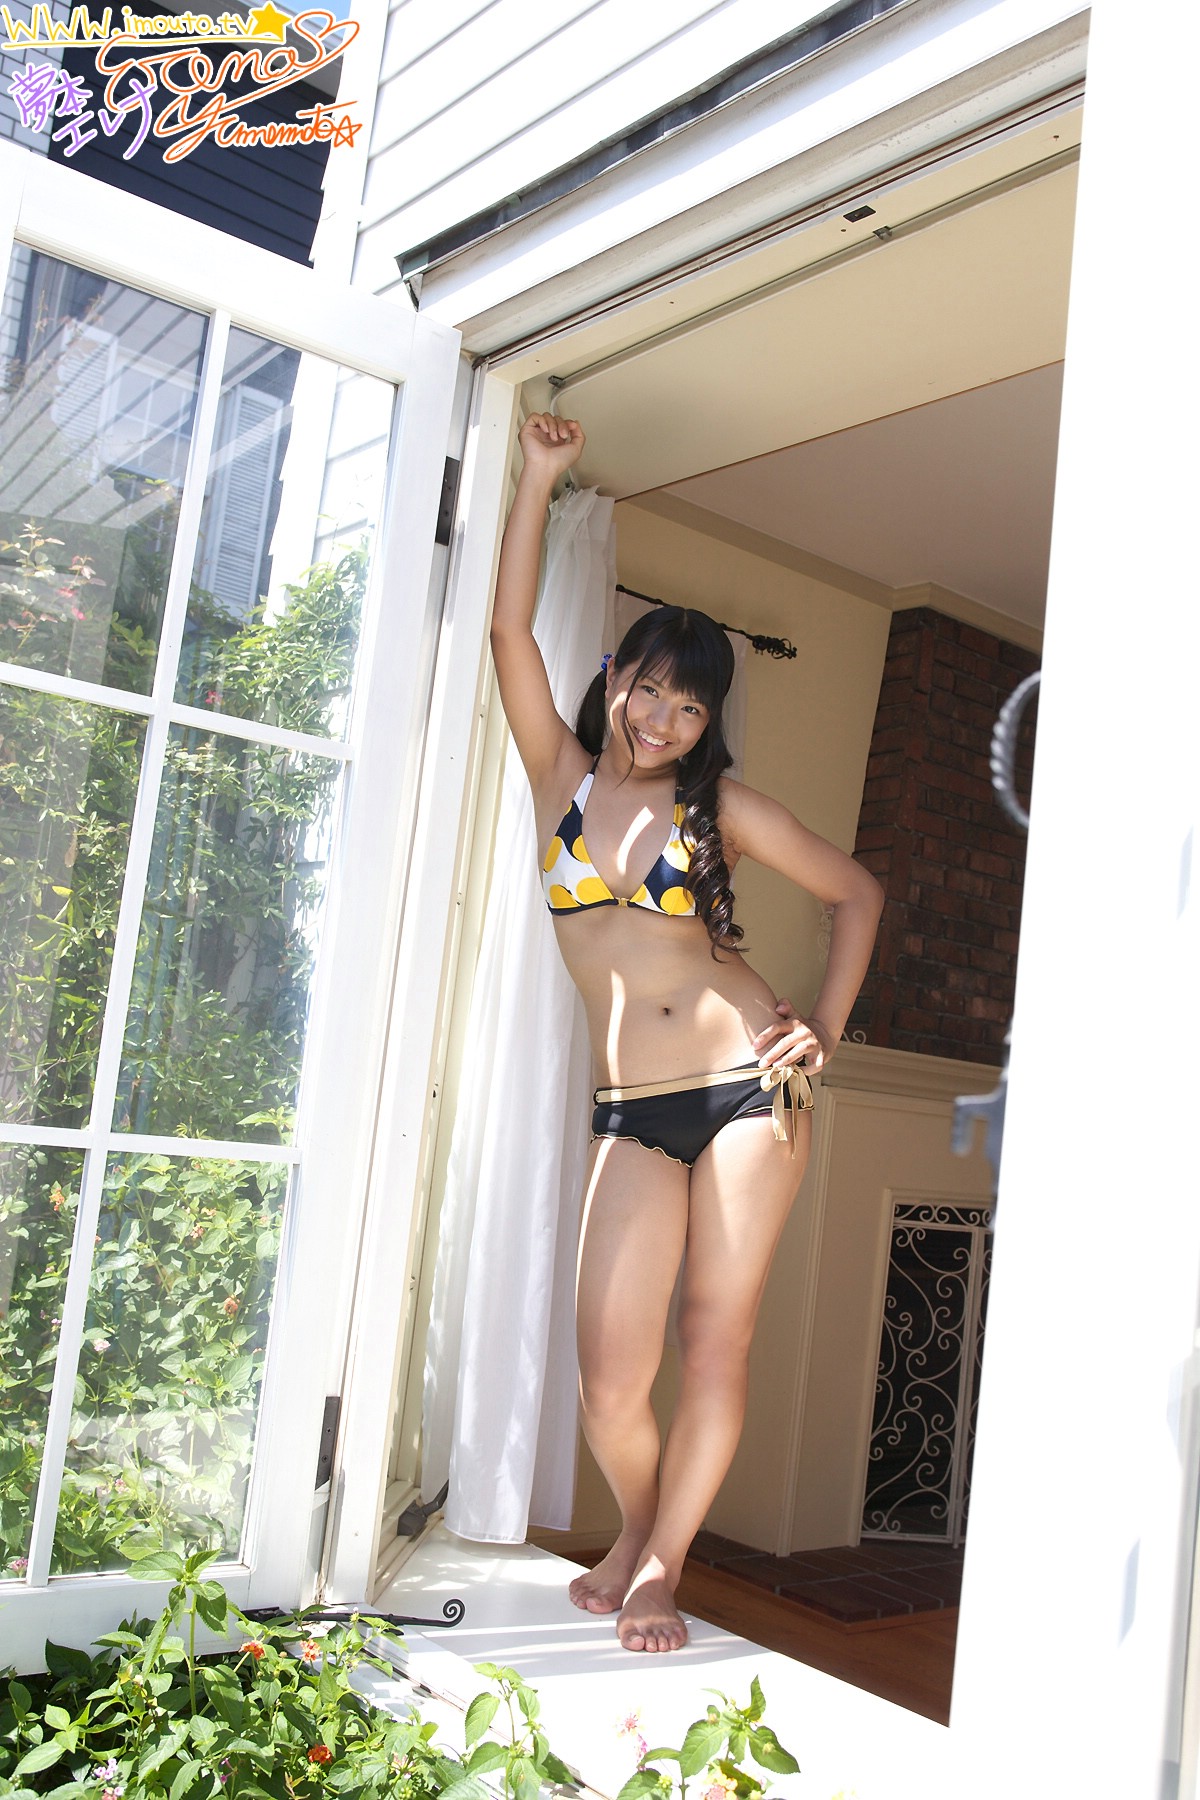 Gravure-idol-Erena-Yumemoto-leaked-nude-050-www.sexvcl.net_ Gravure idol Erena Yumemoto leaked nude sexy 